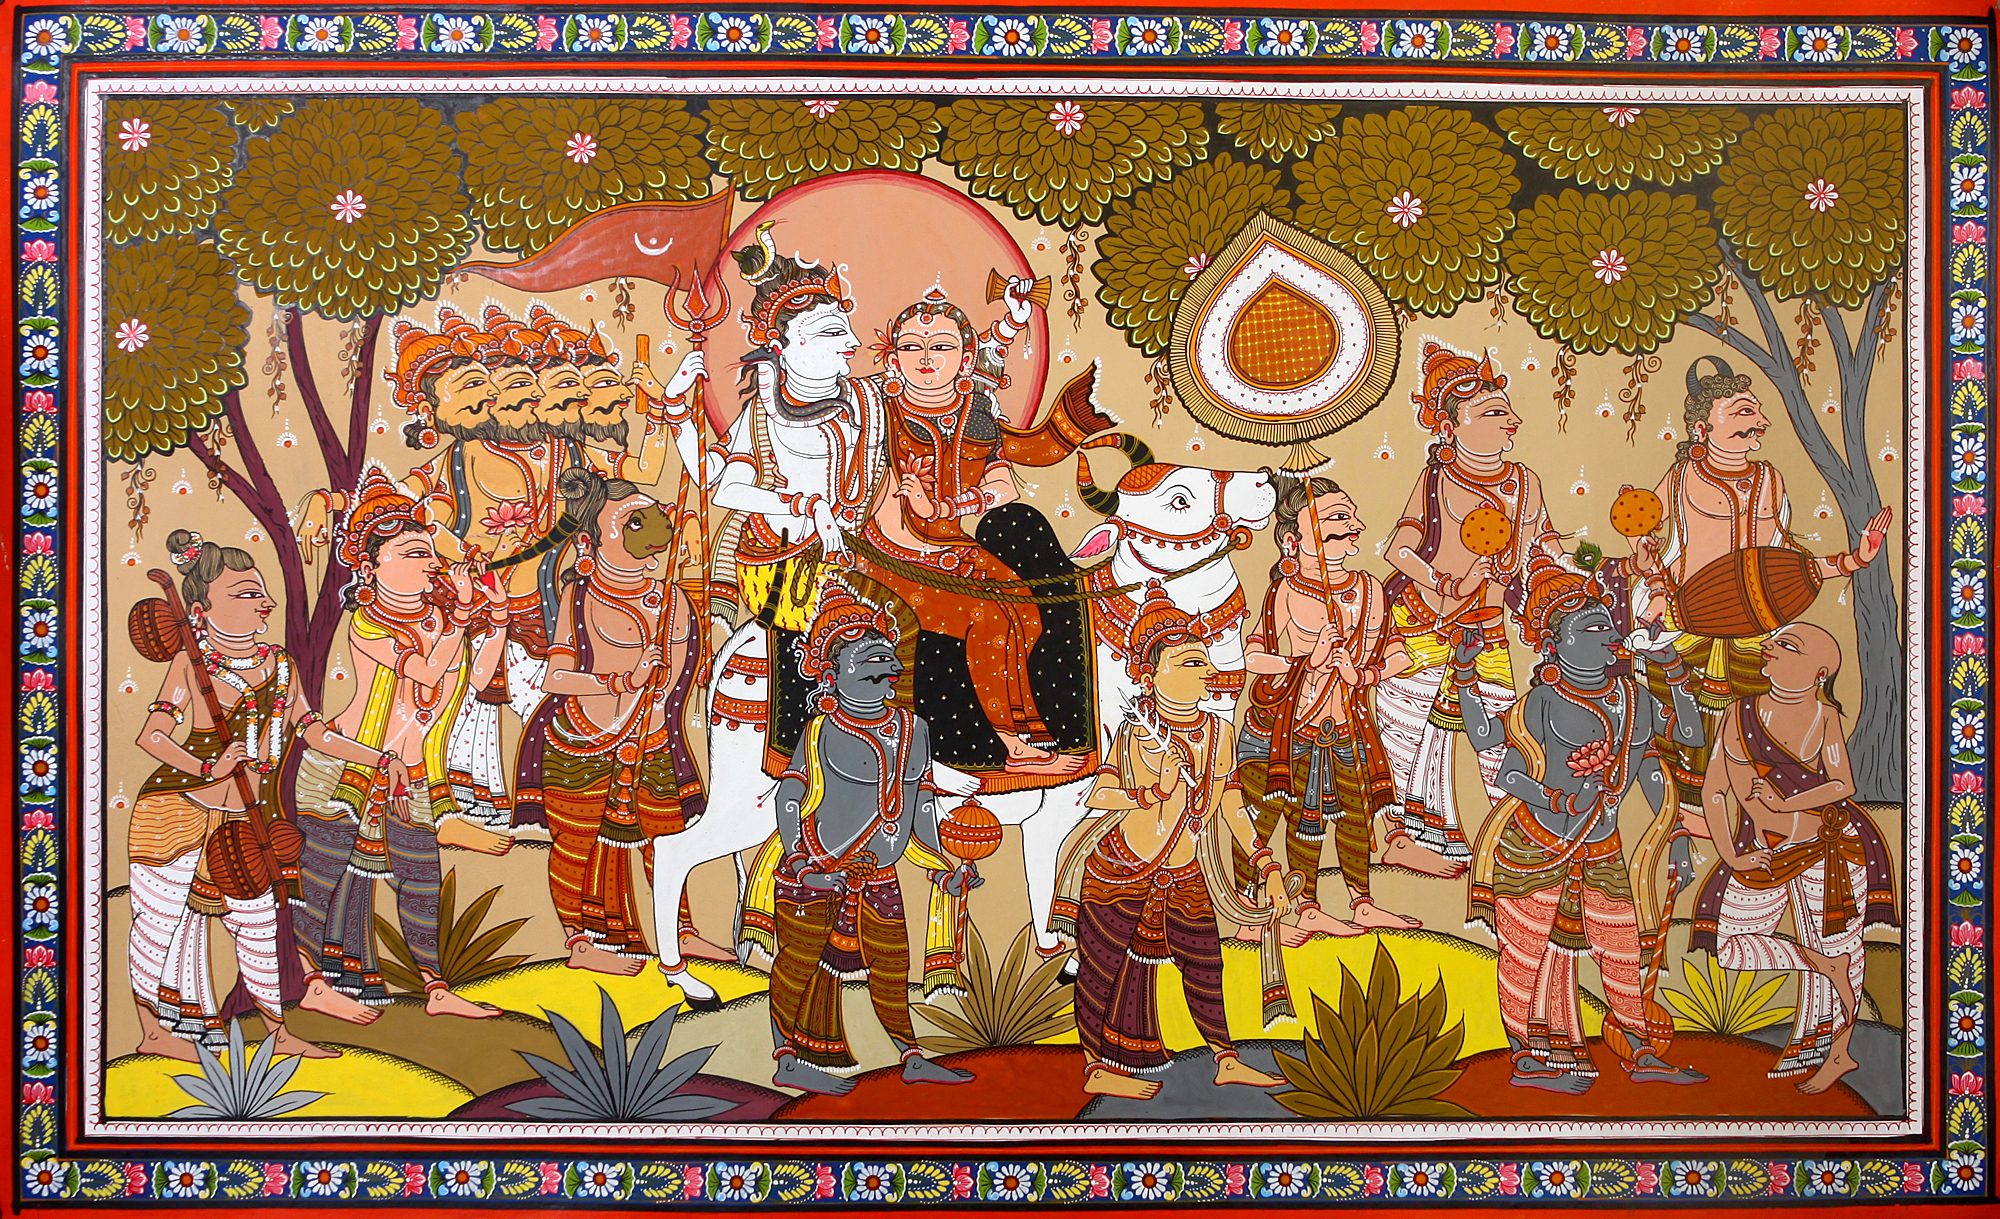 Swayamvara Parvathi Homam